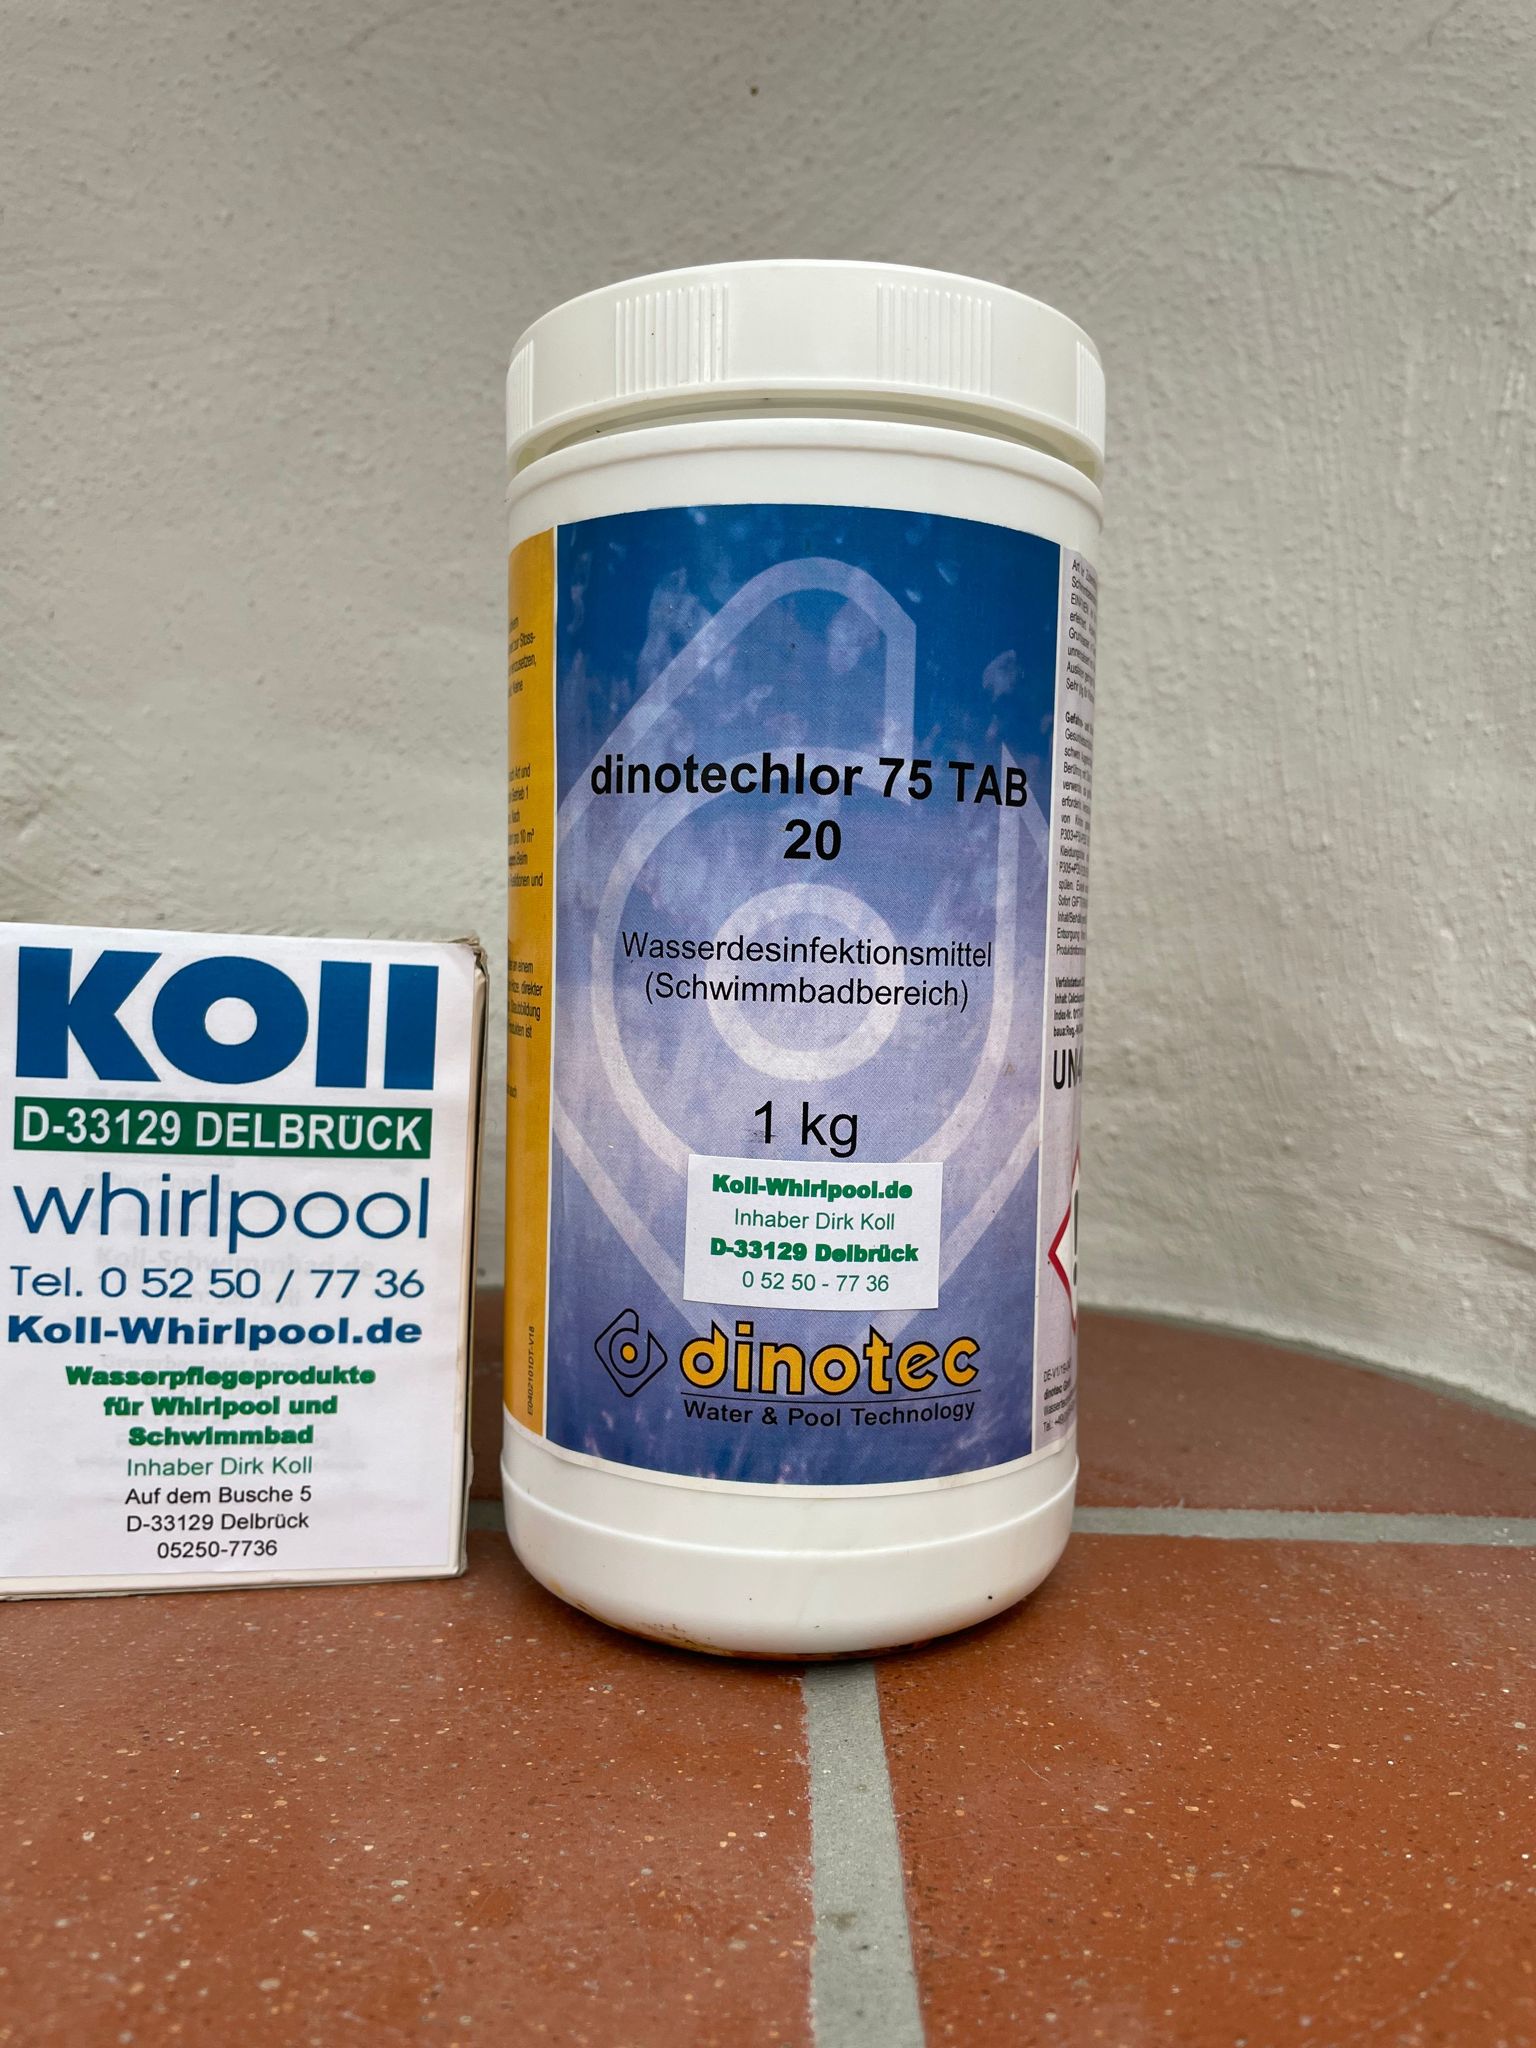 1010-179-00 dinotechlor 75 TAB 20 desinfektion 1kg Koll-Dinotec